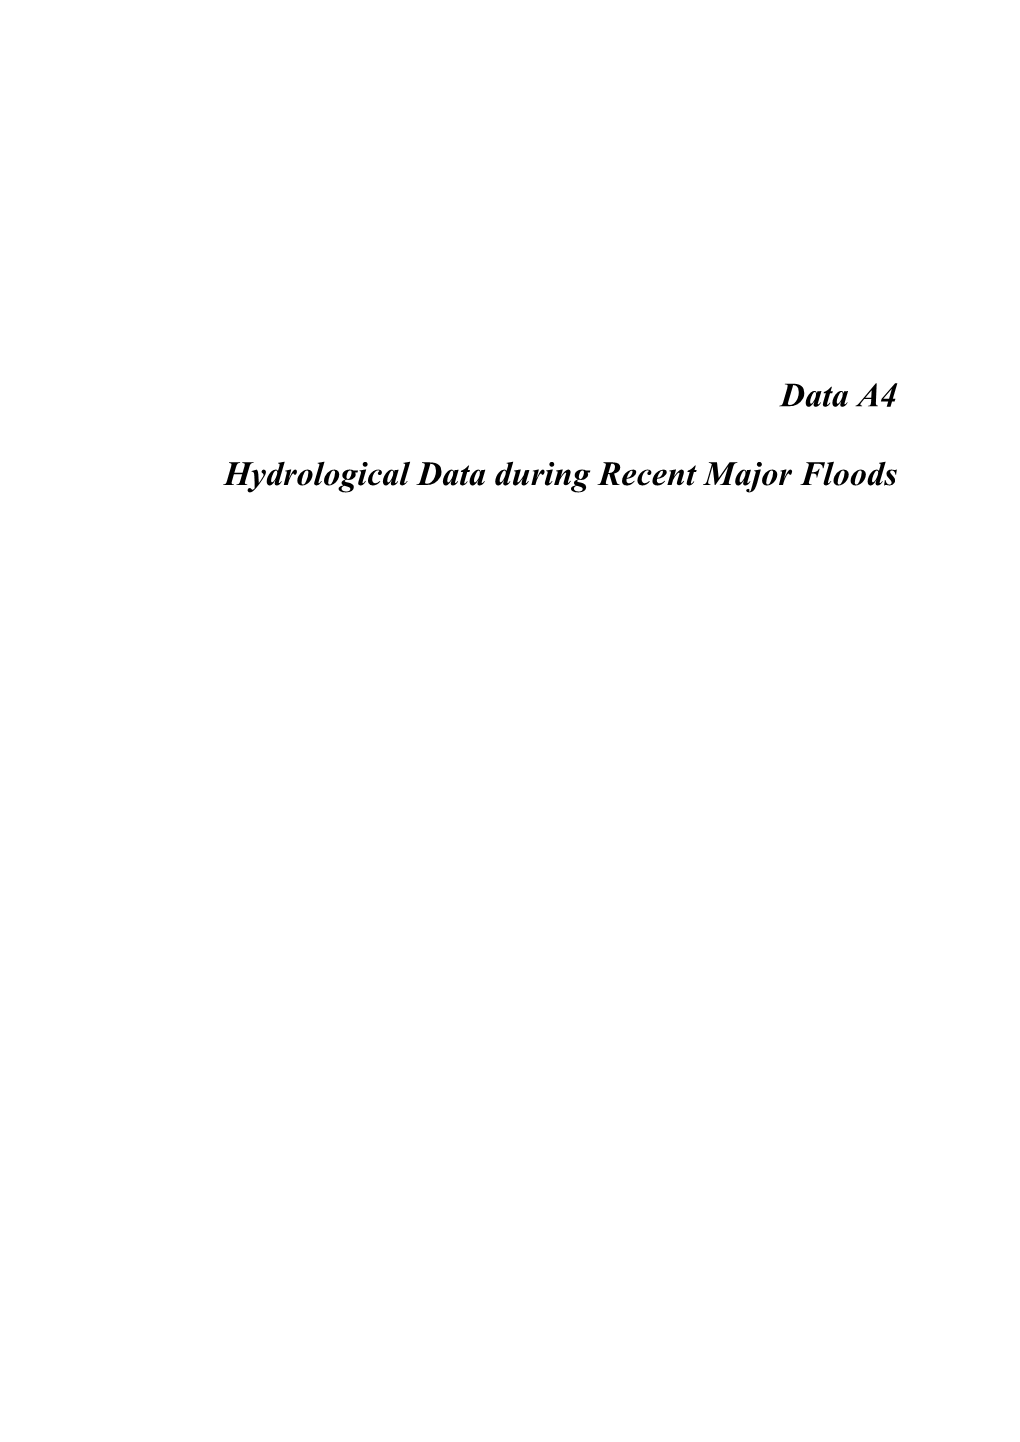 Data A4 Hydrological Data During Recent Major Floods